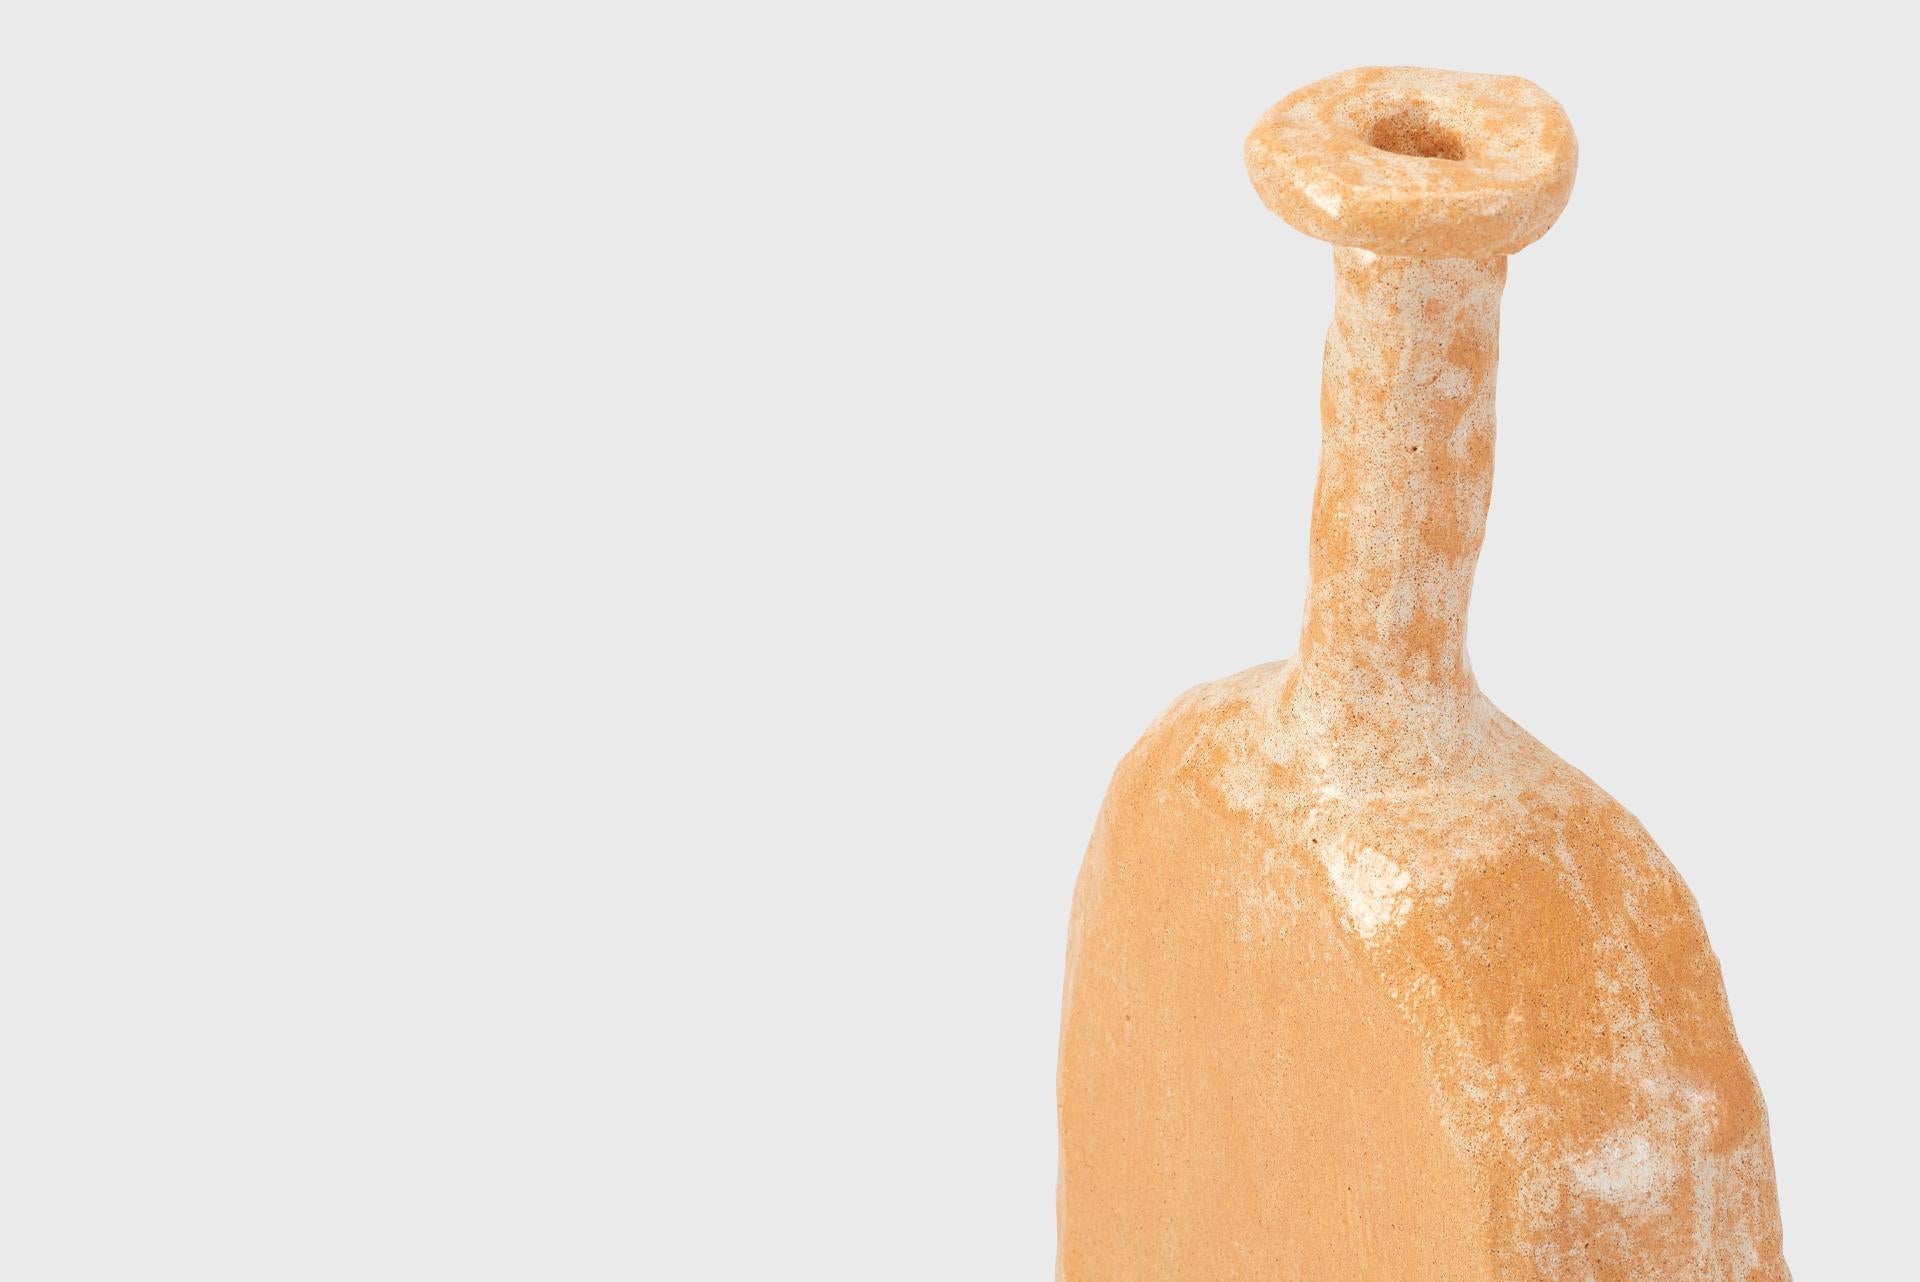 Vase model “Dura”
Manufactured by Willem Van Hooff.
Exclusively for SIDE.
Netherlands, 2023.
Earthenware, glazed.

Measurements
23 x 8 x 43h cm
9,1 x 3,1 x 16,9h in

Provenance
Holland, Netherlands.

Exhibitions
Casavells